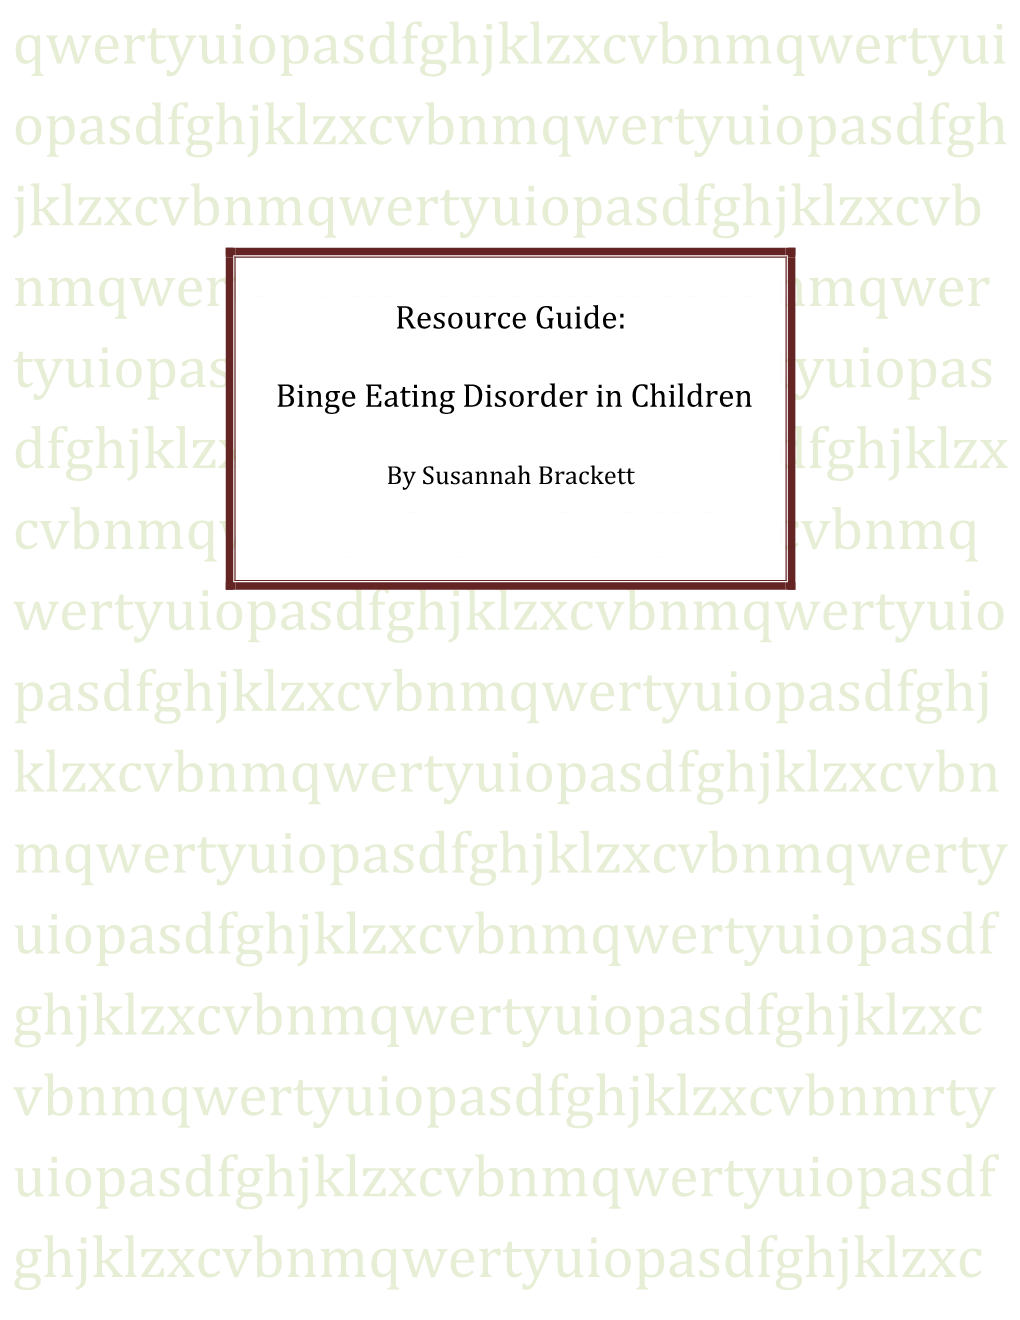 Resource Guide for Binge Eating Disorder in Children